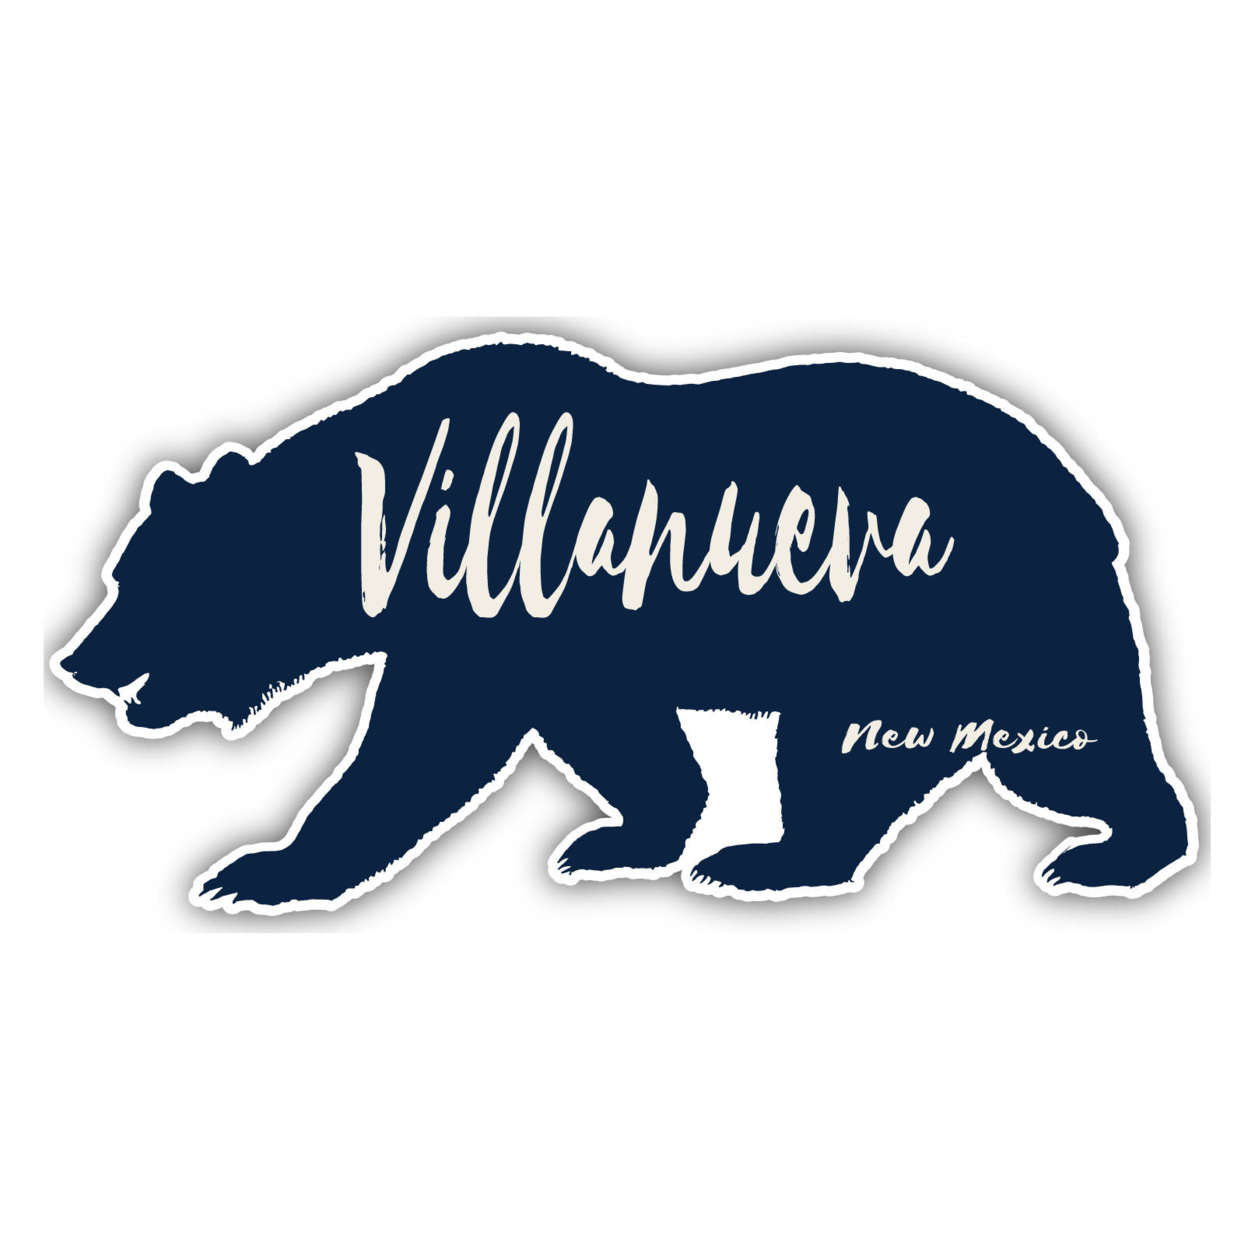 Villanueva New Mexico Souvenir Decorative Stickers (Choose Theme And Size) - Single Unit, 4-Inch, Bear